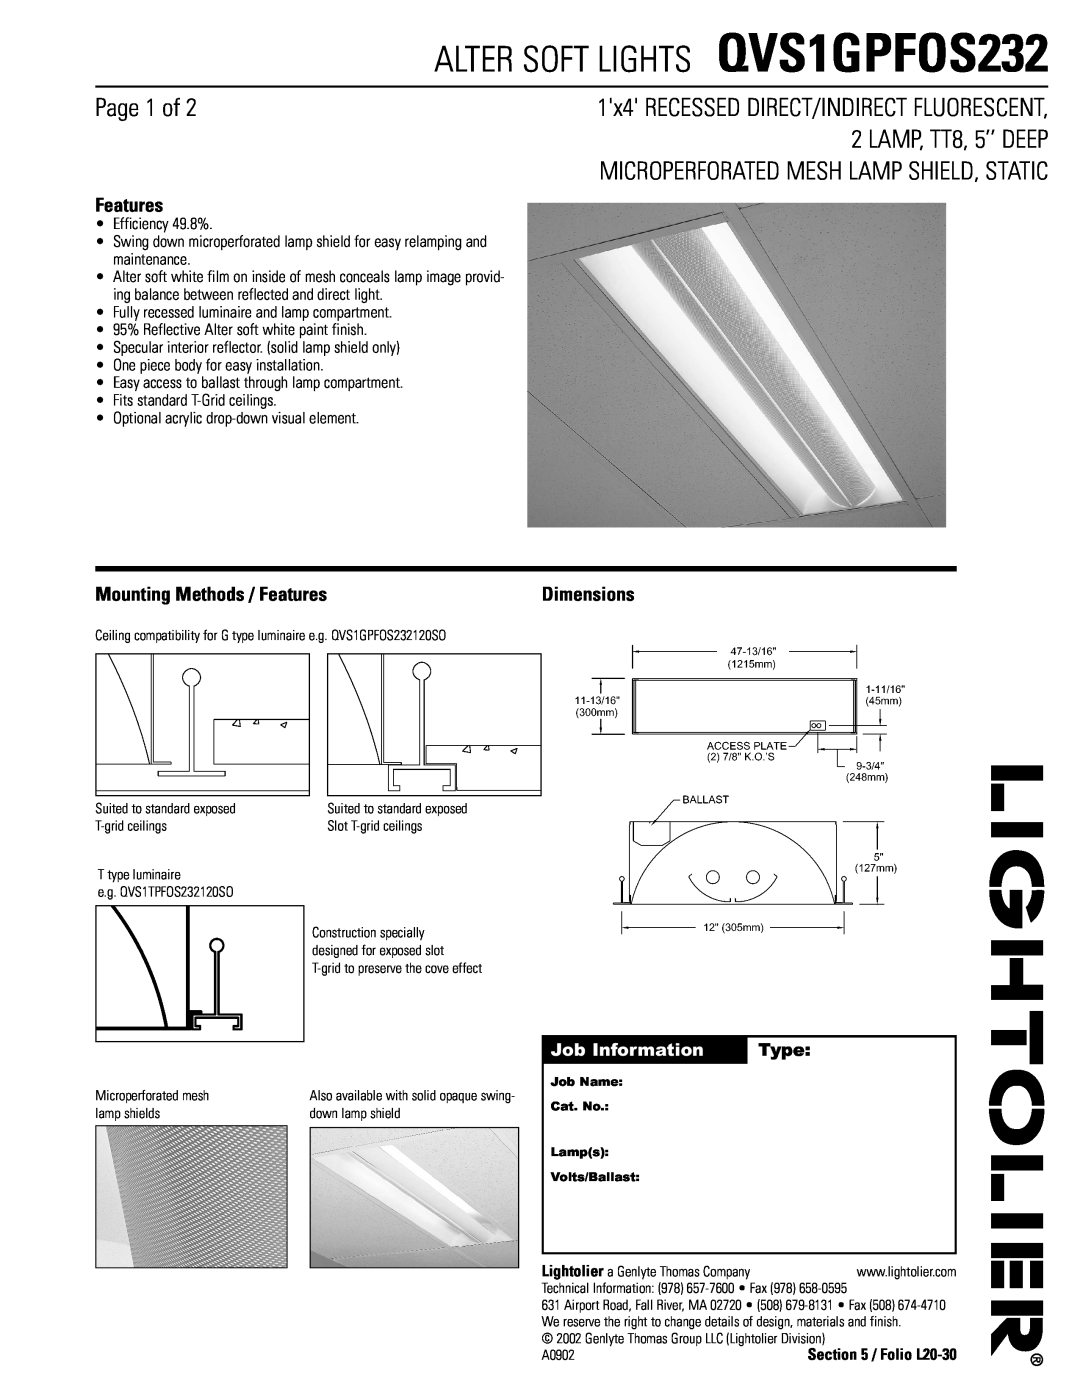 Lightolier dimensions ALTER SOFT LIGHTS QVS1GPFOS232, Page 1 of, LAMP, TT8, 5’’ DEEP, Features, Job Information, Type 